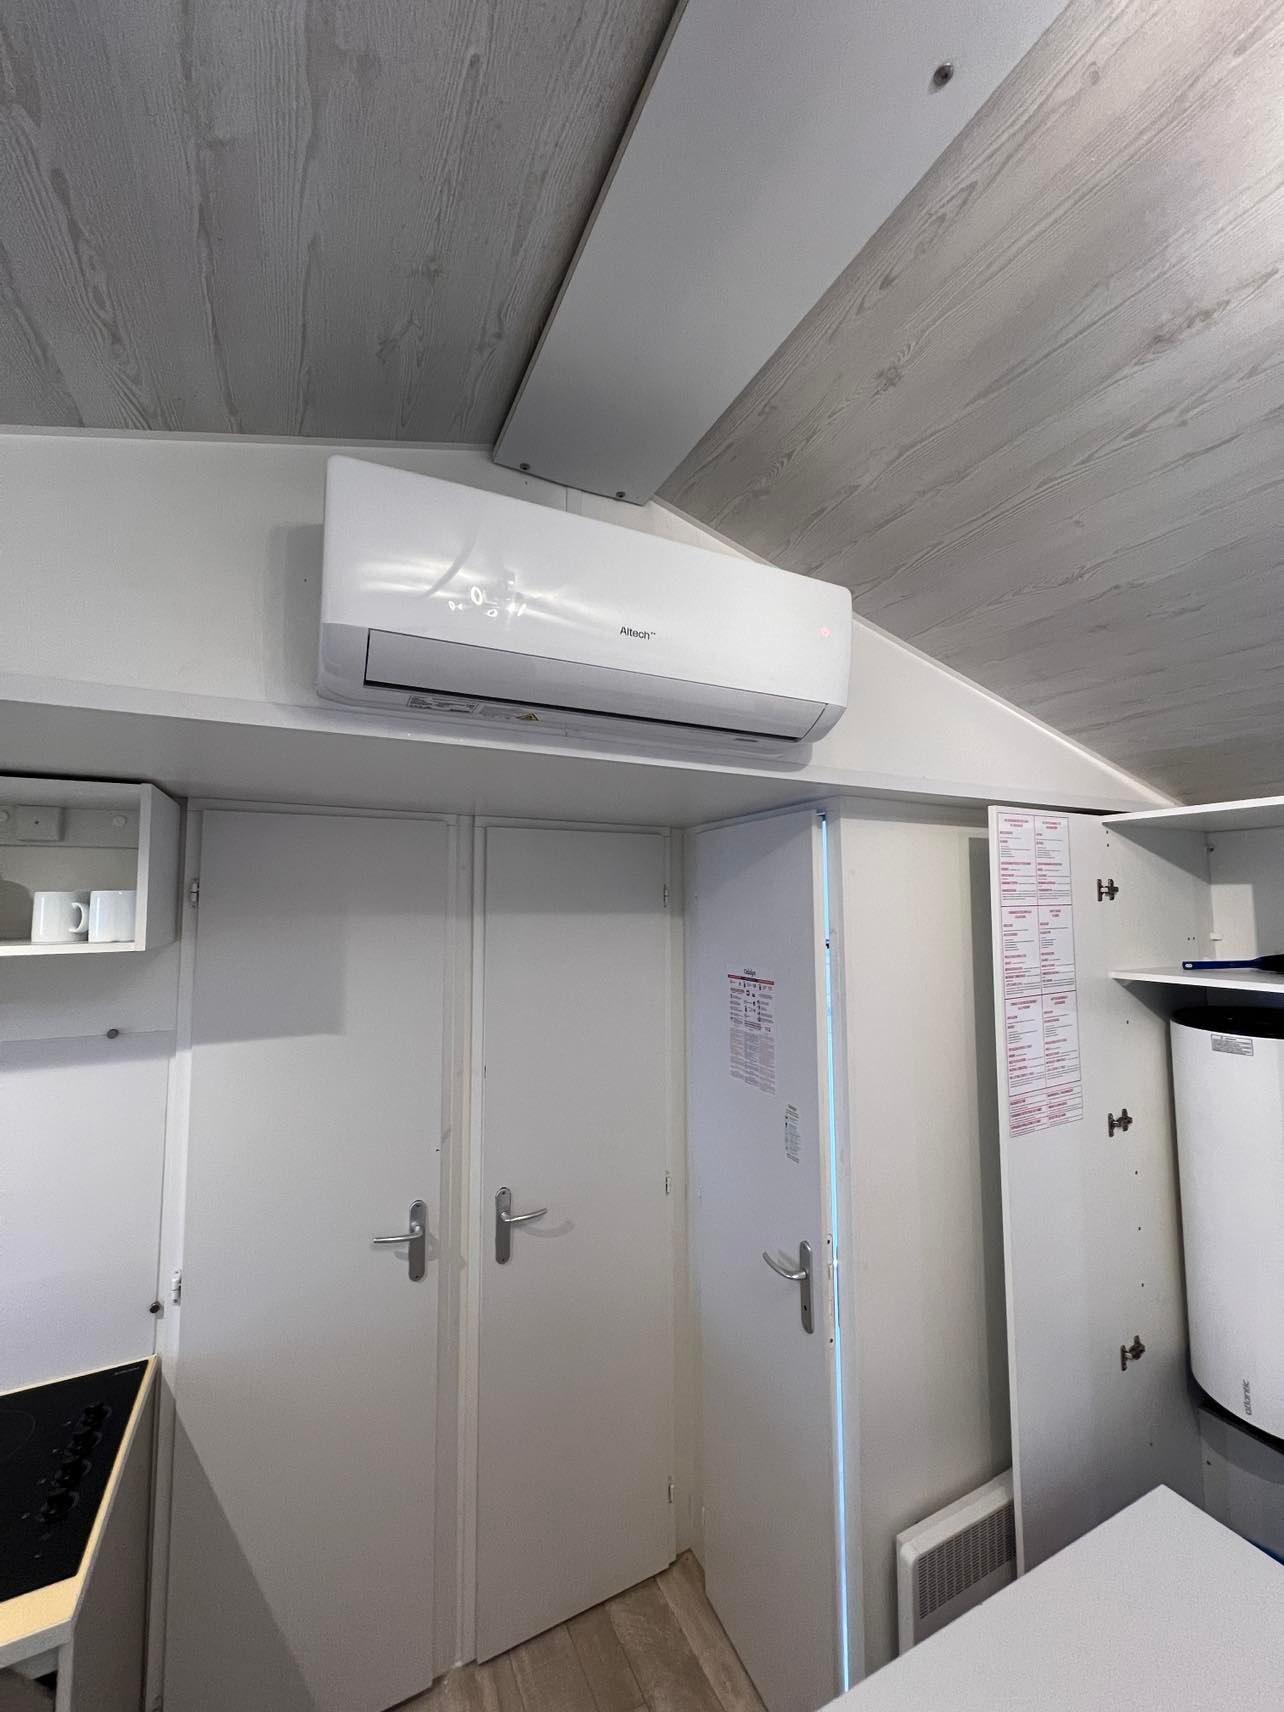 Climatisation chauffage kbelec mobile home irm hottelerie de plein air camping vendee